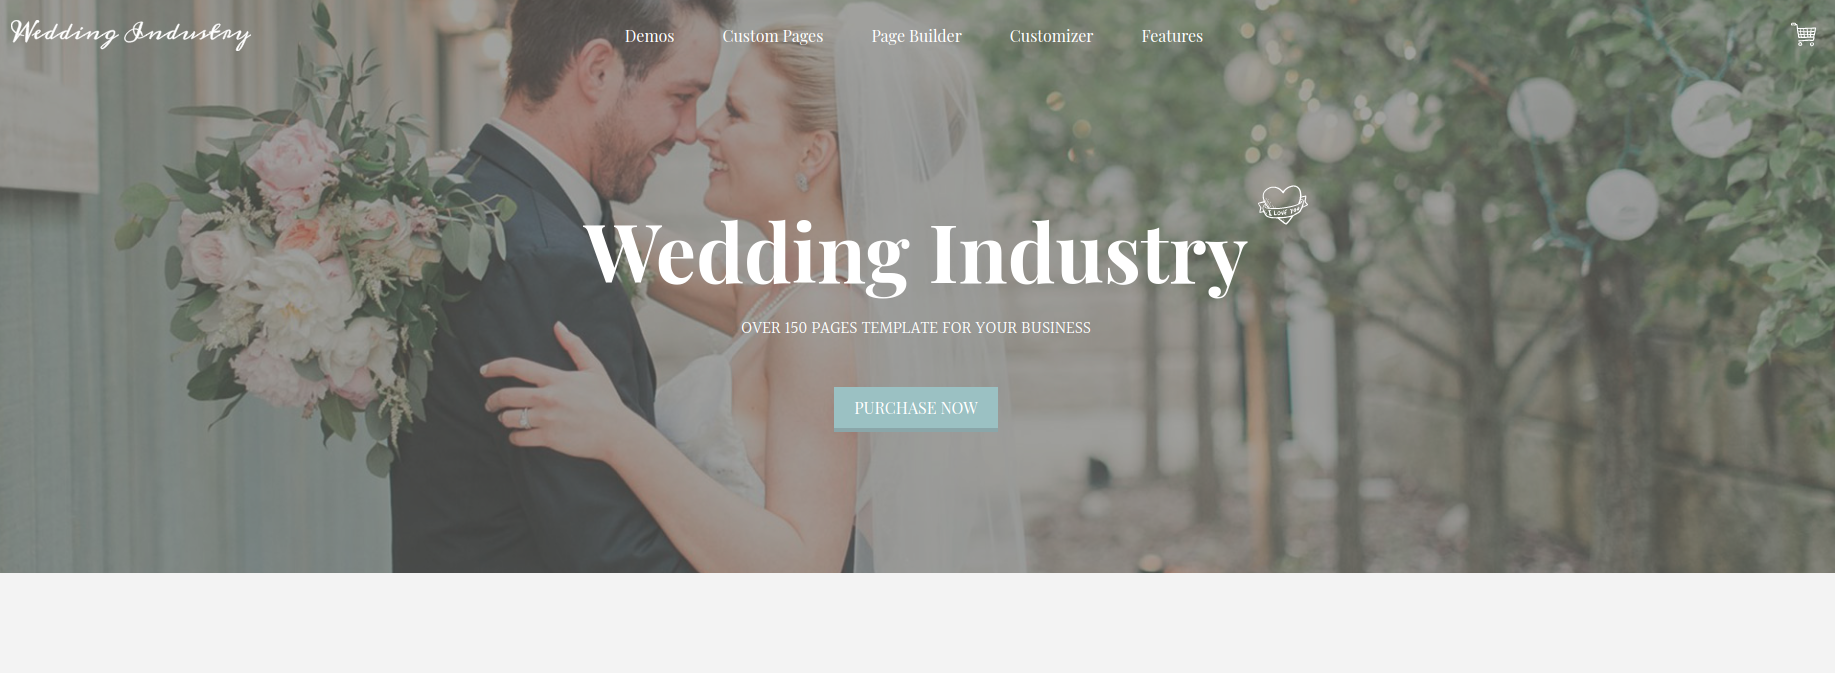 wedding industry